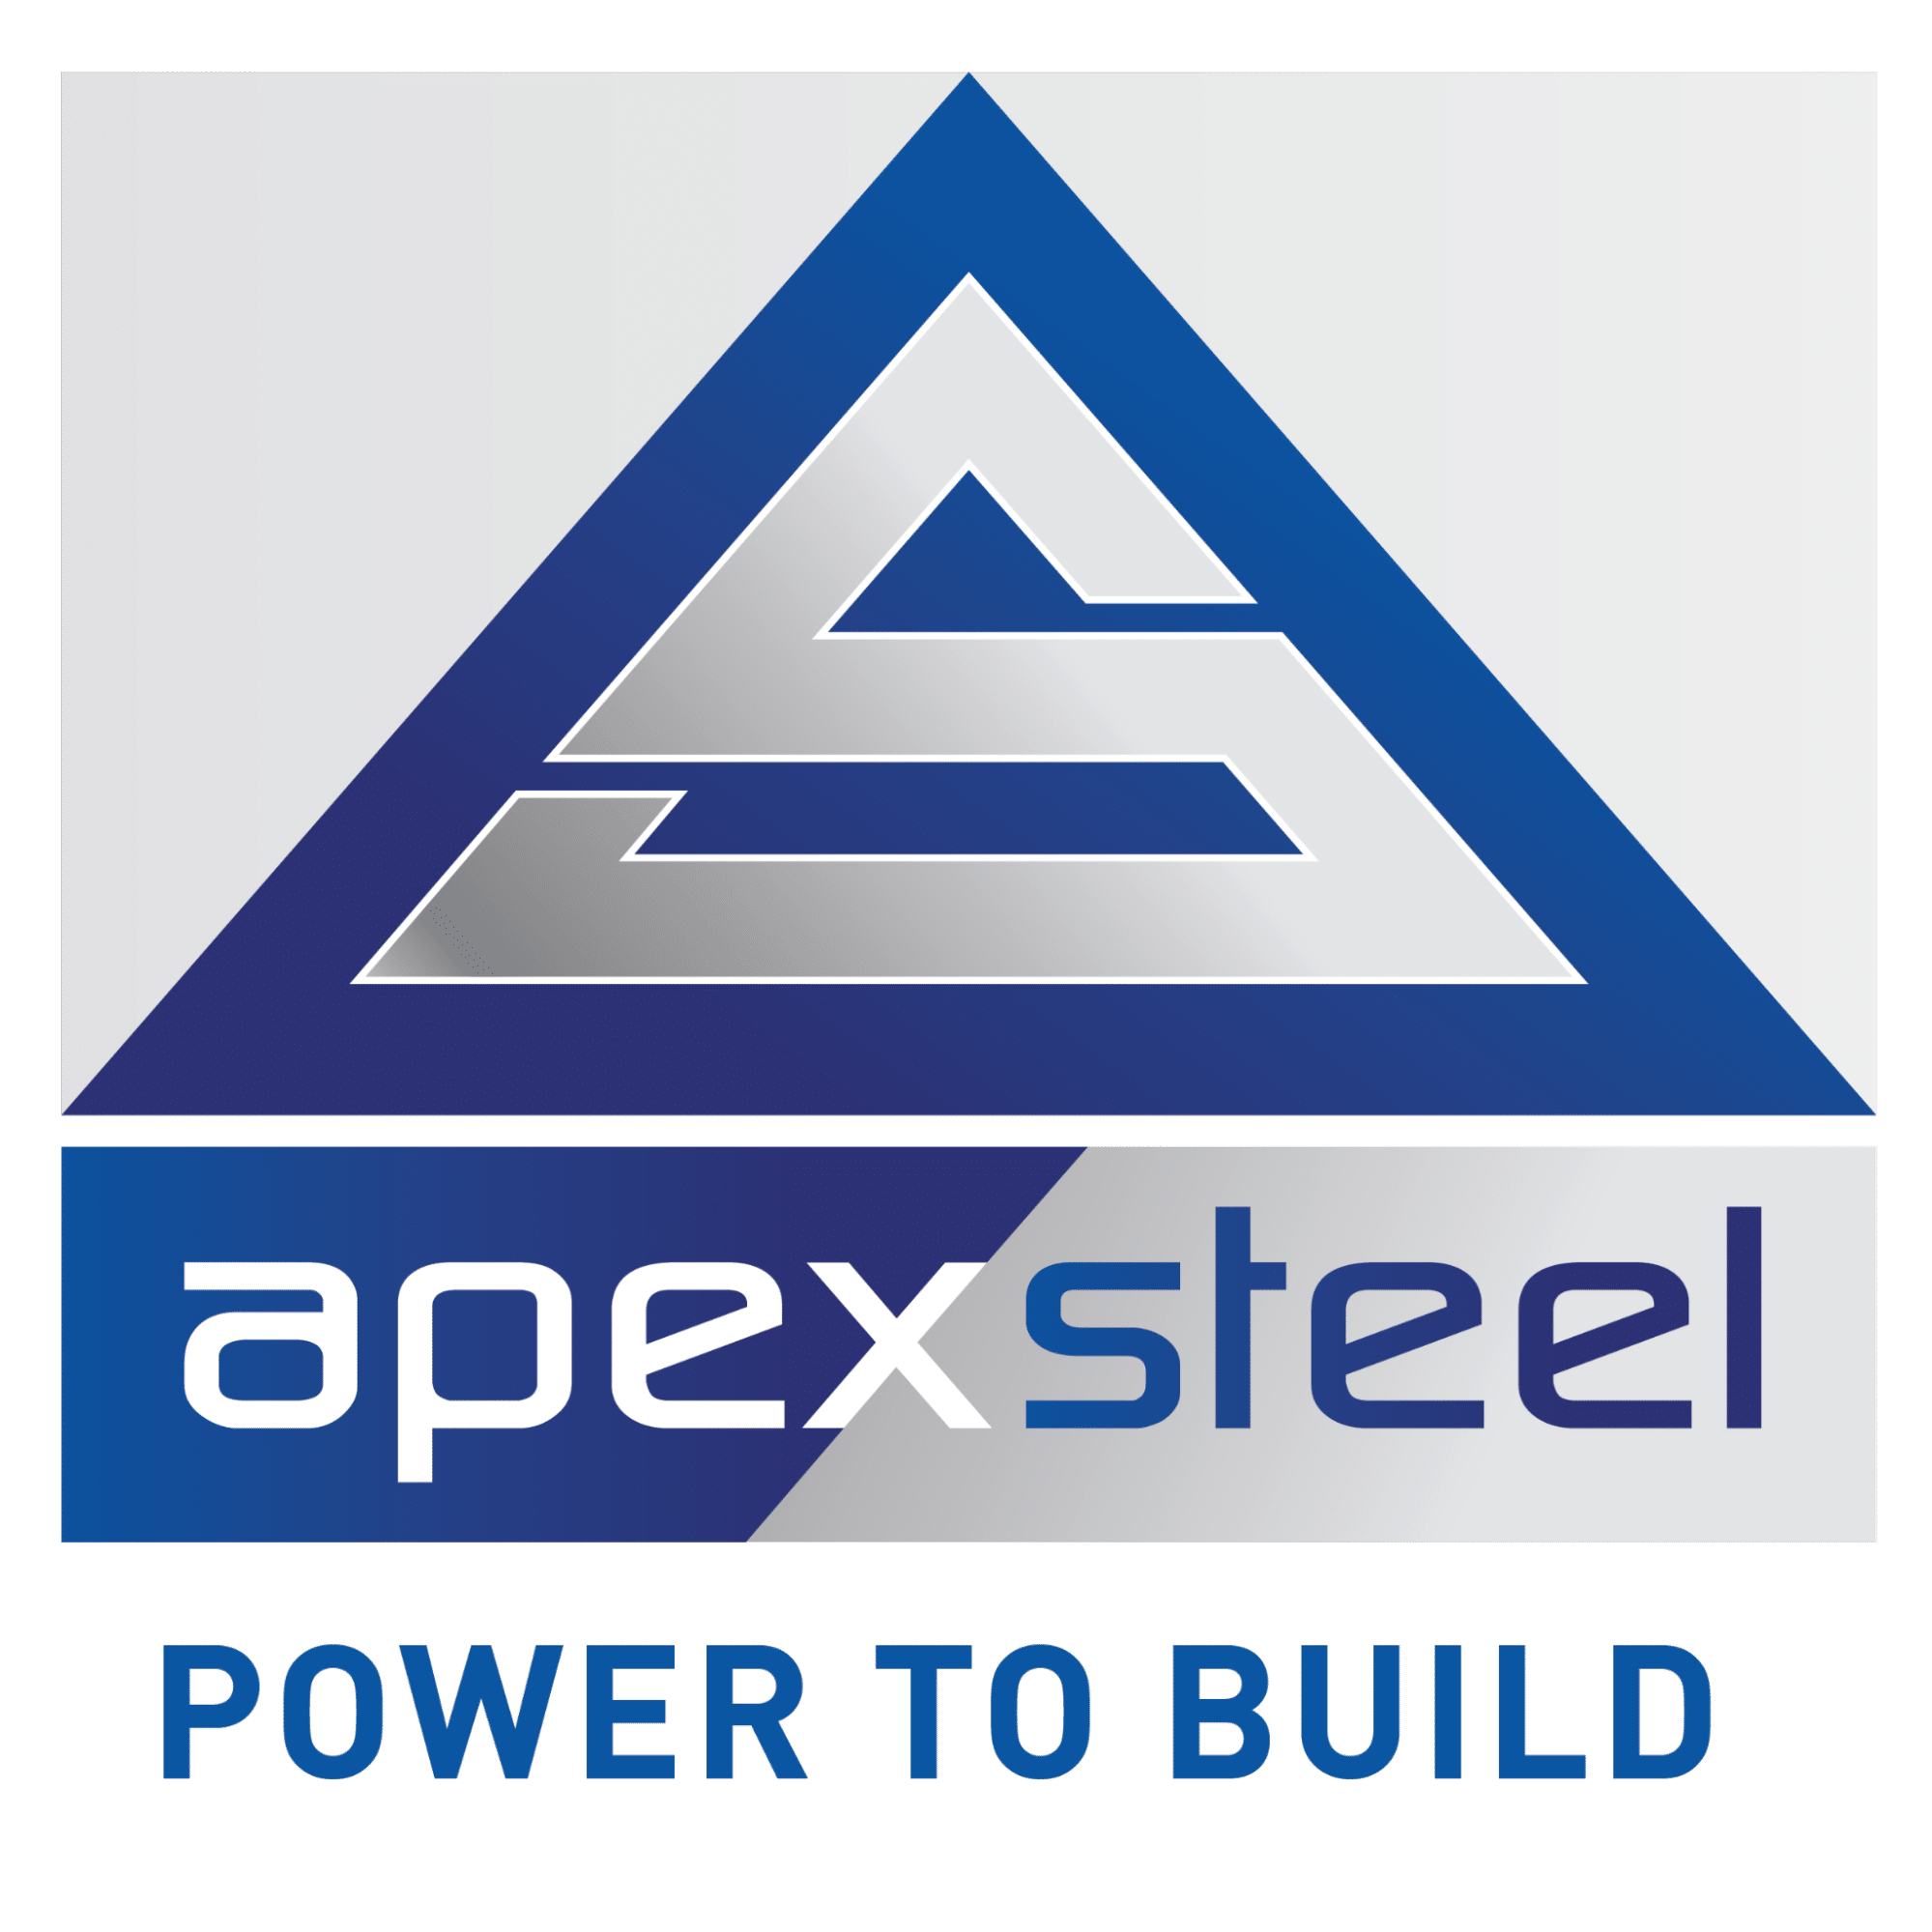 Nairobi's Apex Steel Ltd. logo